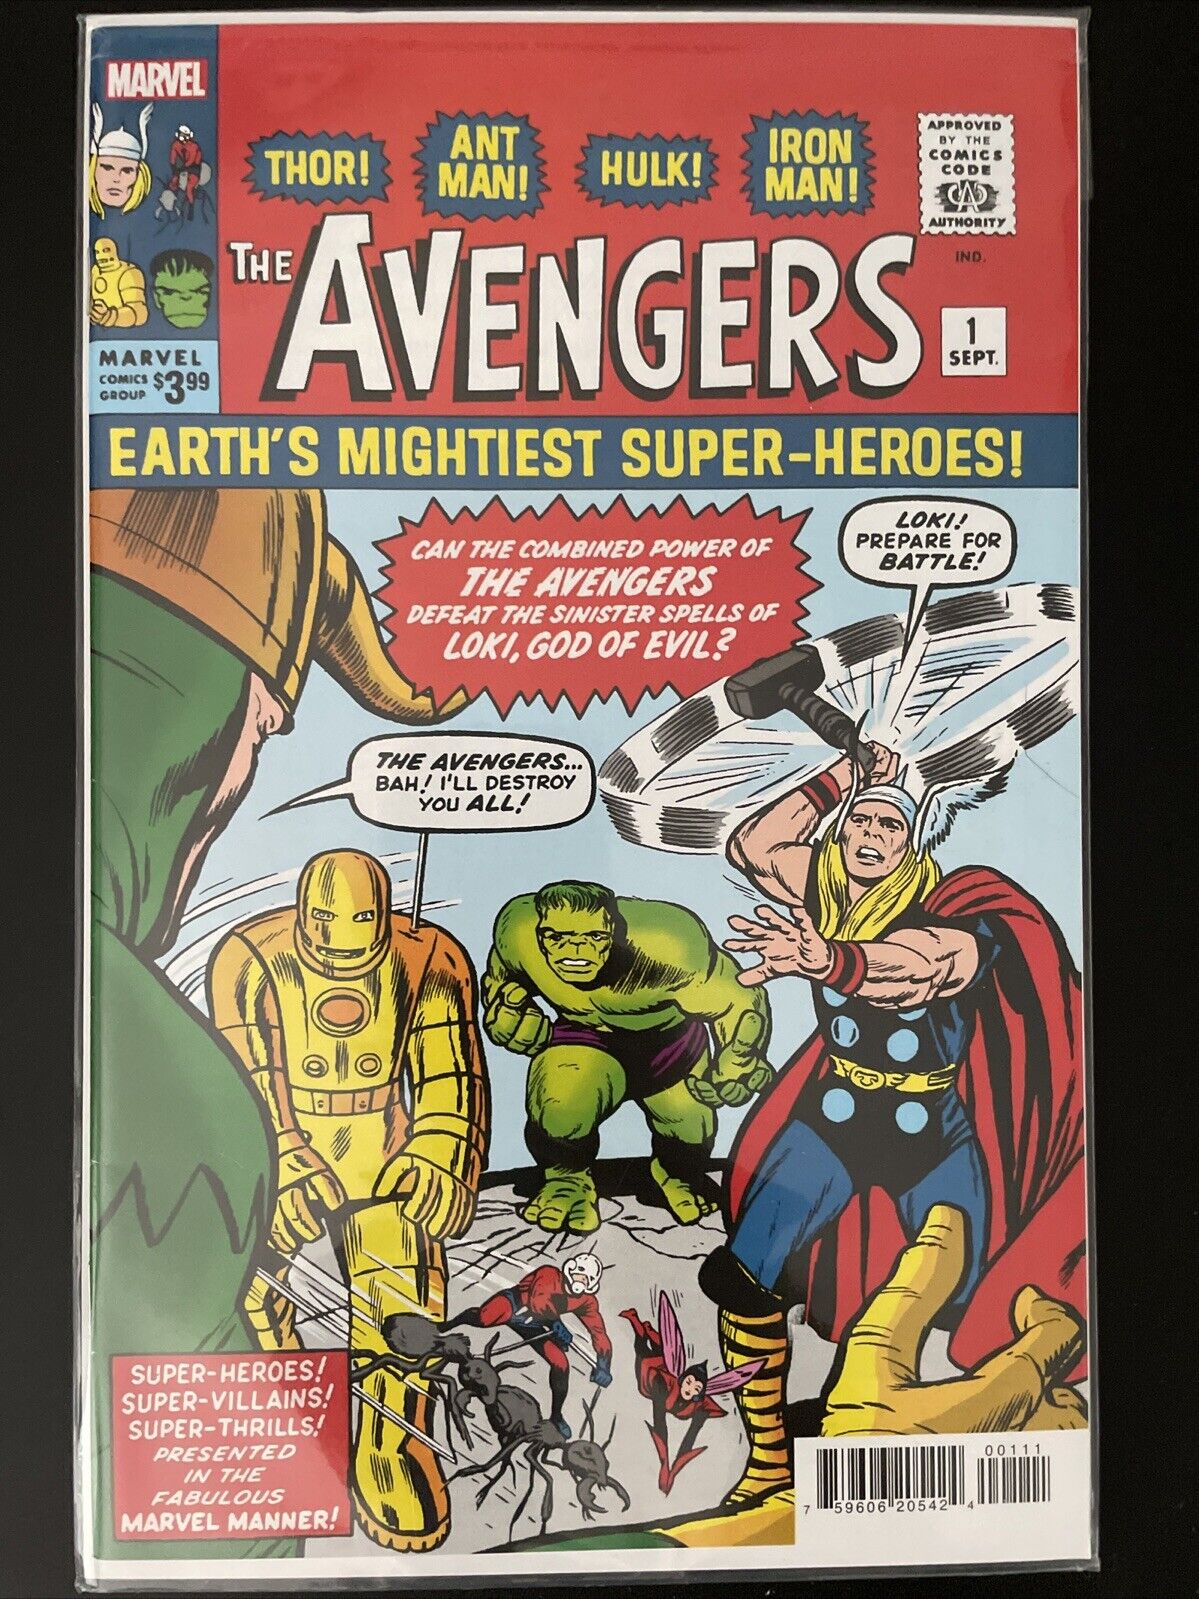 The Avengers #1 (Marvel) Facsimile Edition Stan Lee & Jack Kirby